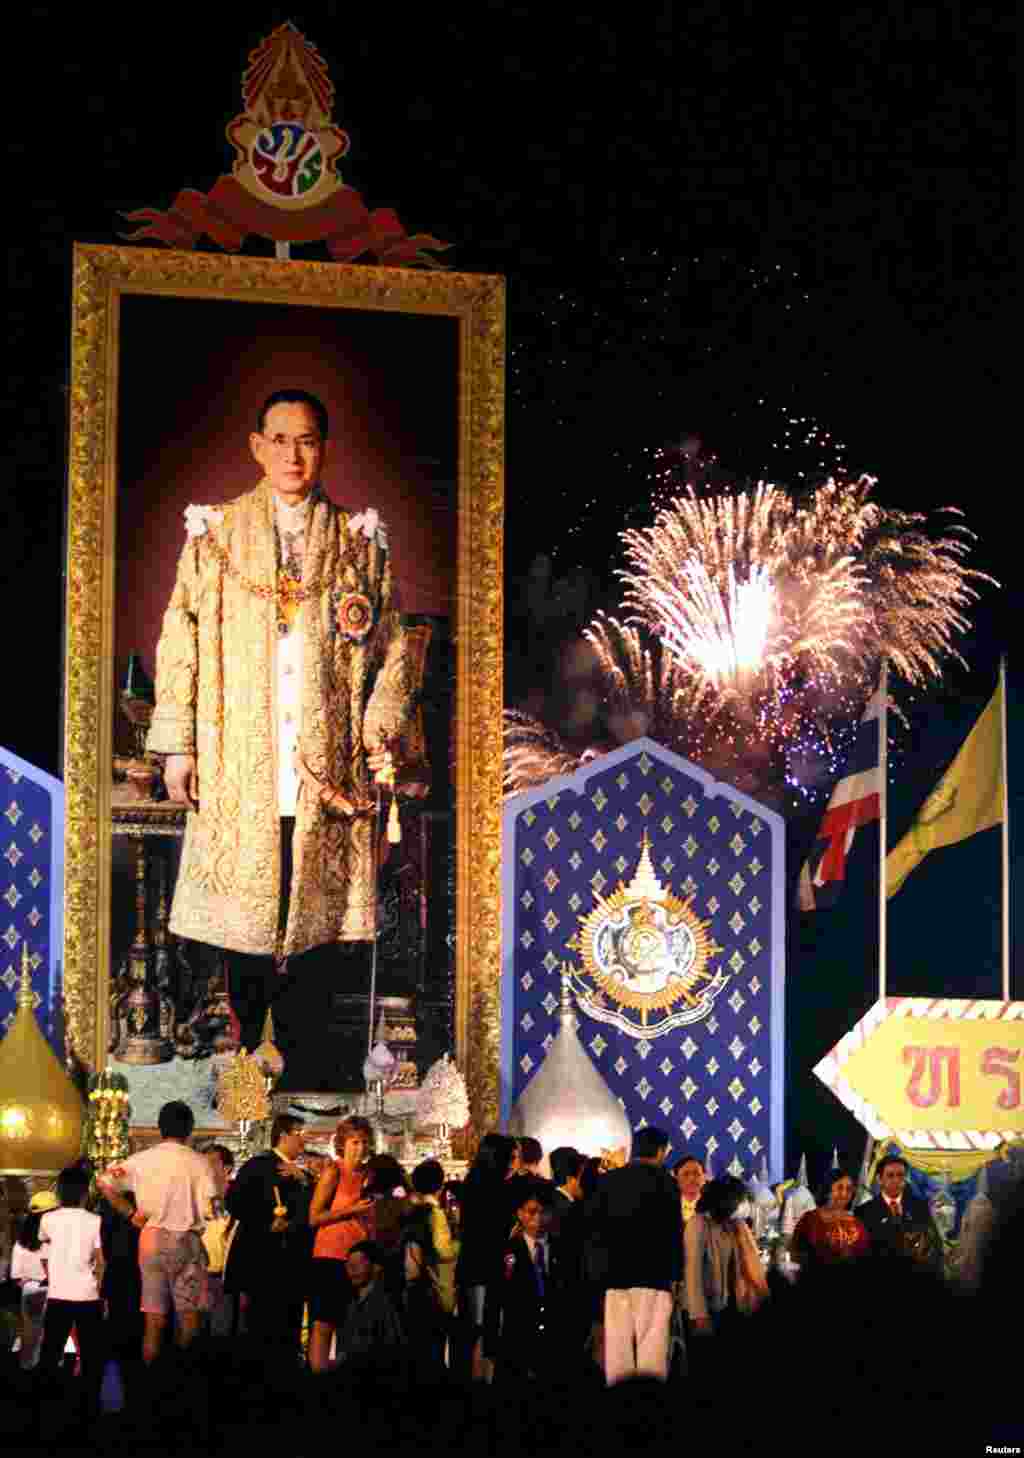 Potret Raja Bhumibol Adulyadej menghiasi panggung saat kembang api menyala di Bangkok, 1999, dalam perayaan ulang tahun Raja ke-72.